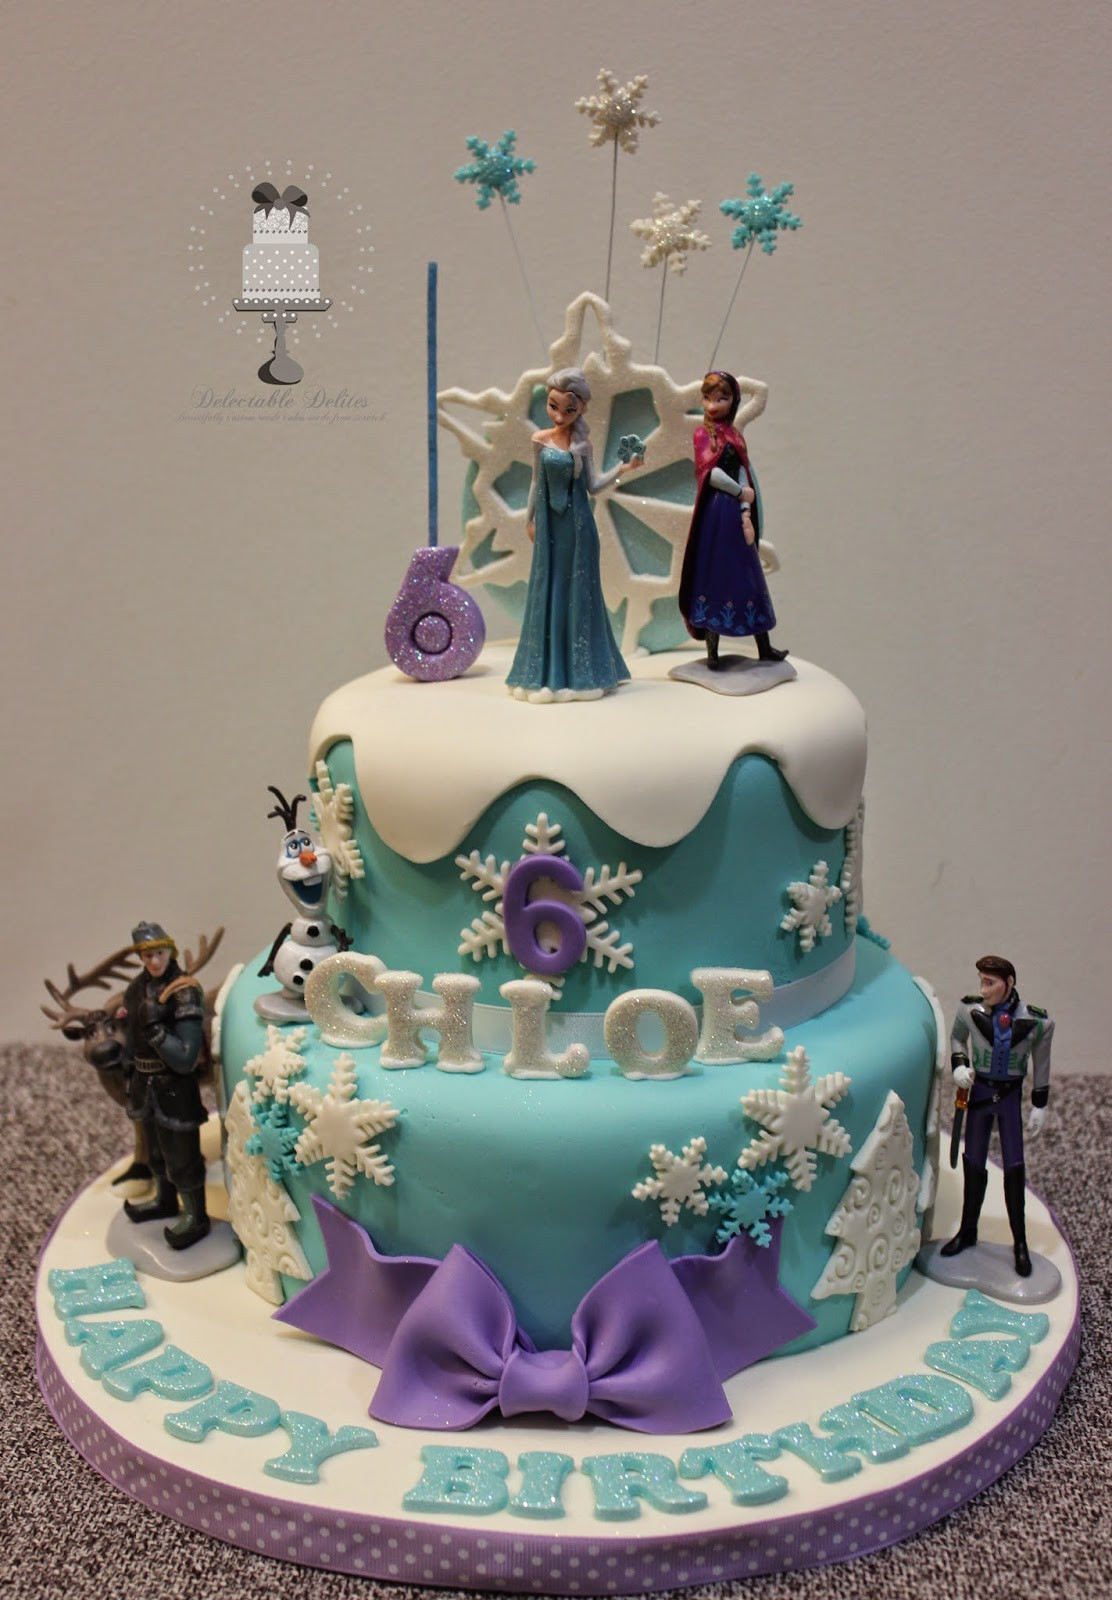 Frozen Birthday Cake Ideas
 Delectable Delites Frozen cake for Chole s 6th birthday